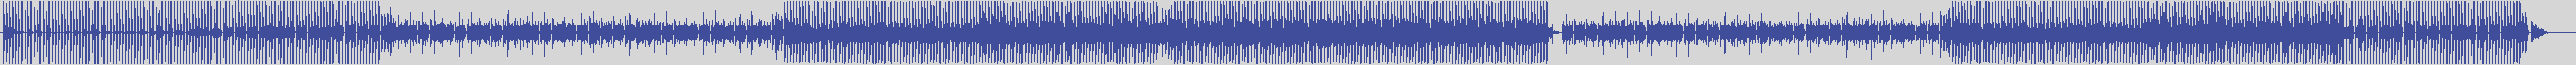 nf_boyz_records [NFY026] Electric Boys - Ticro [Micro Mix] audio wave form